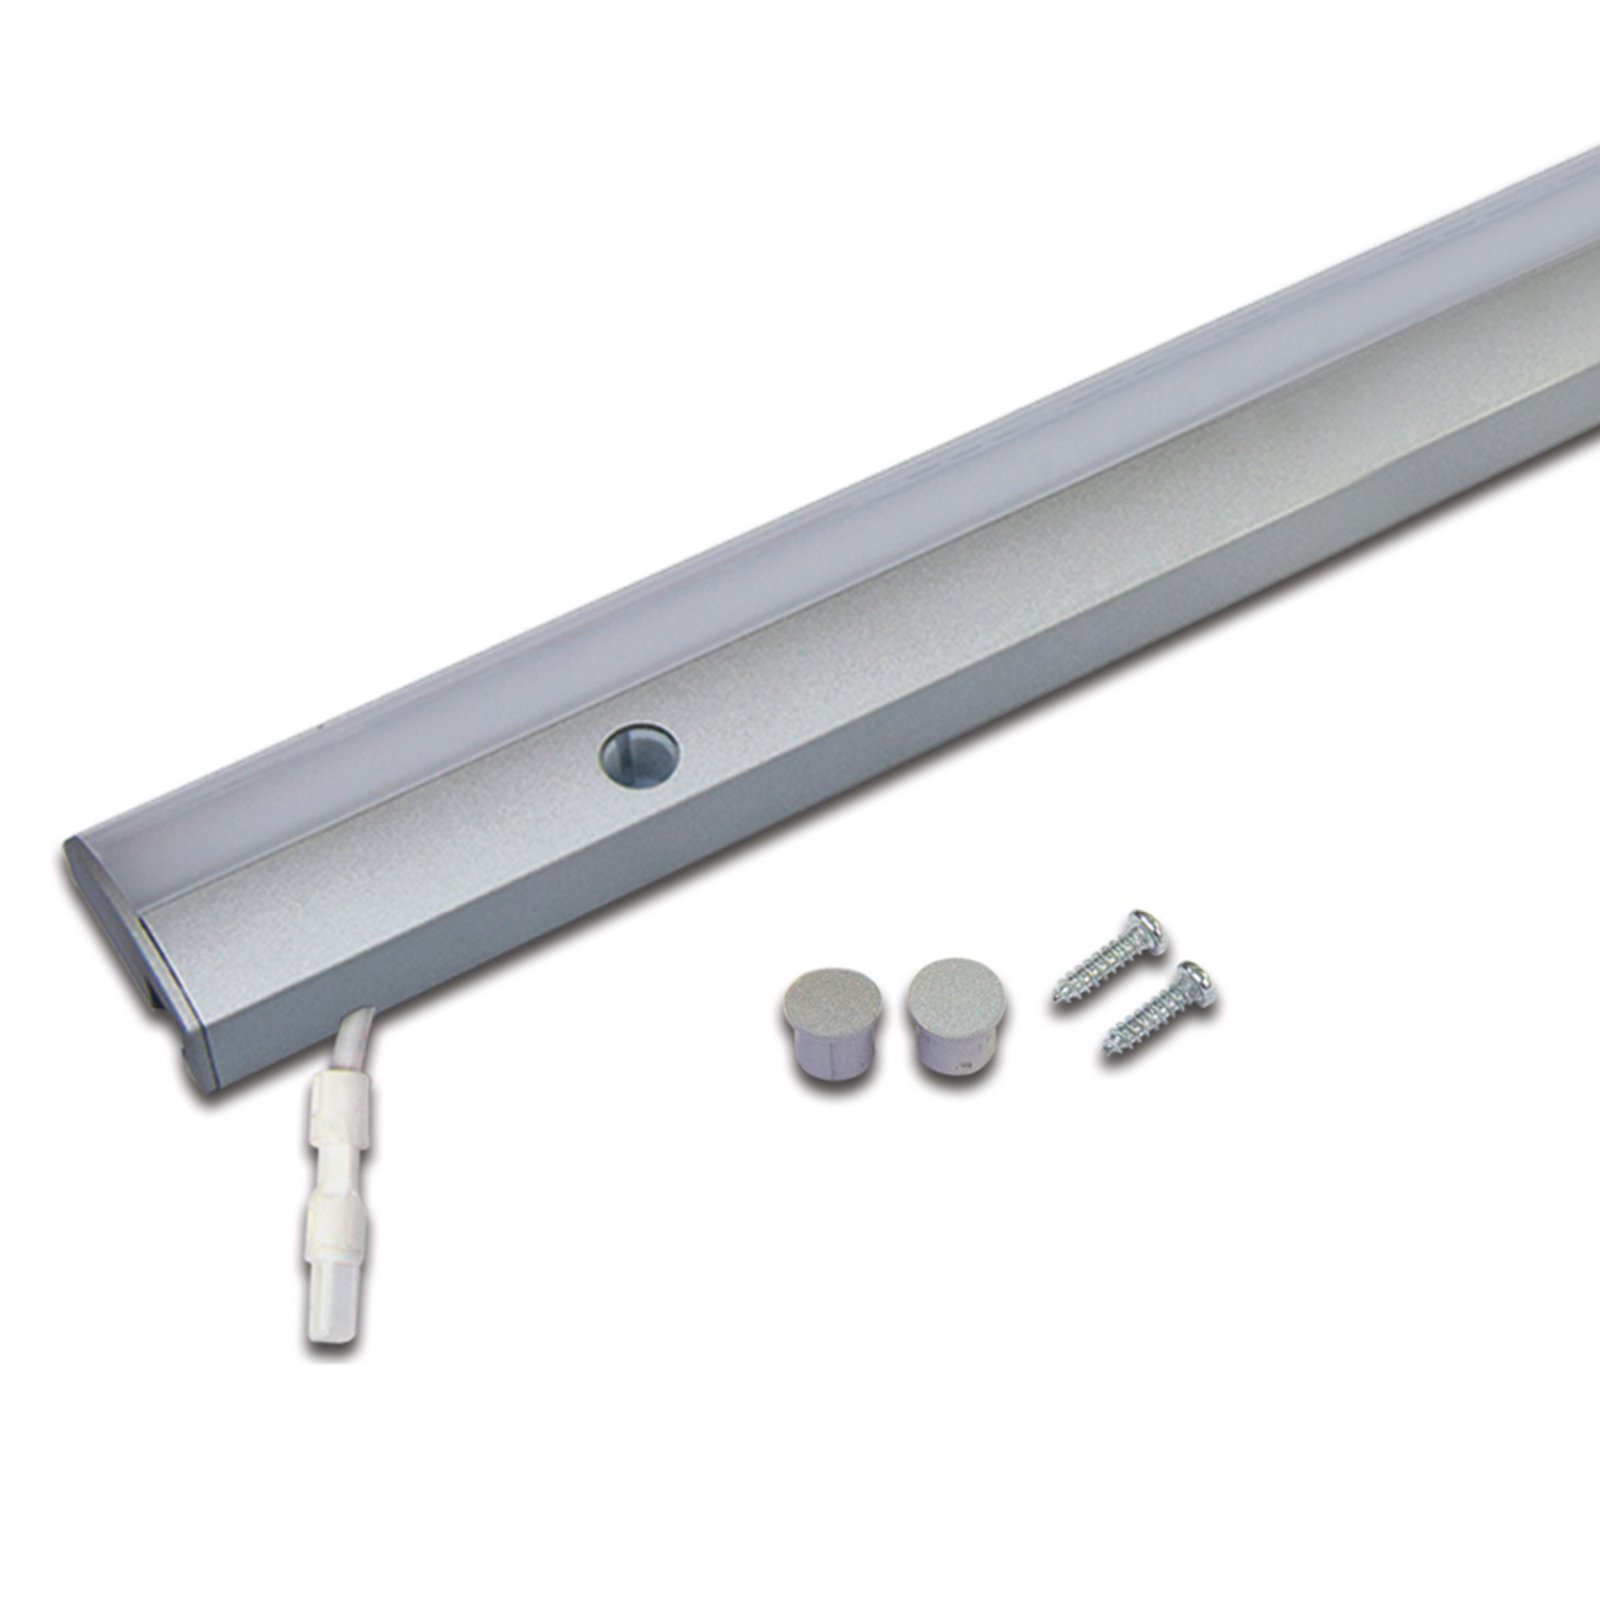 LED ModuLite F, 90 cm pitkä LED-kaapinalusvalaisin